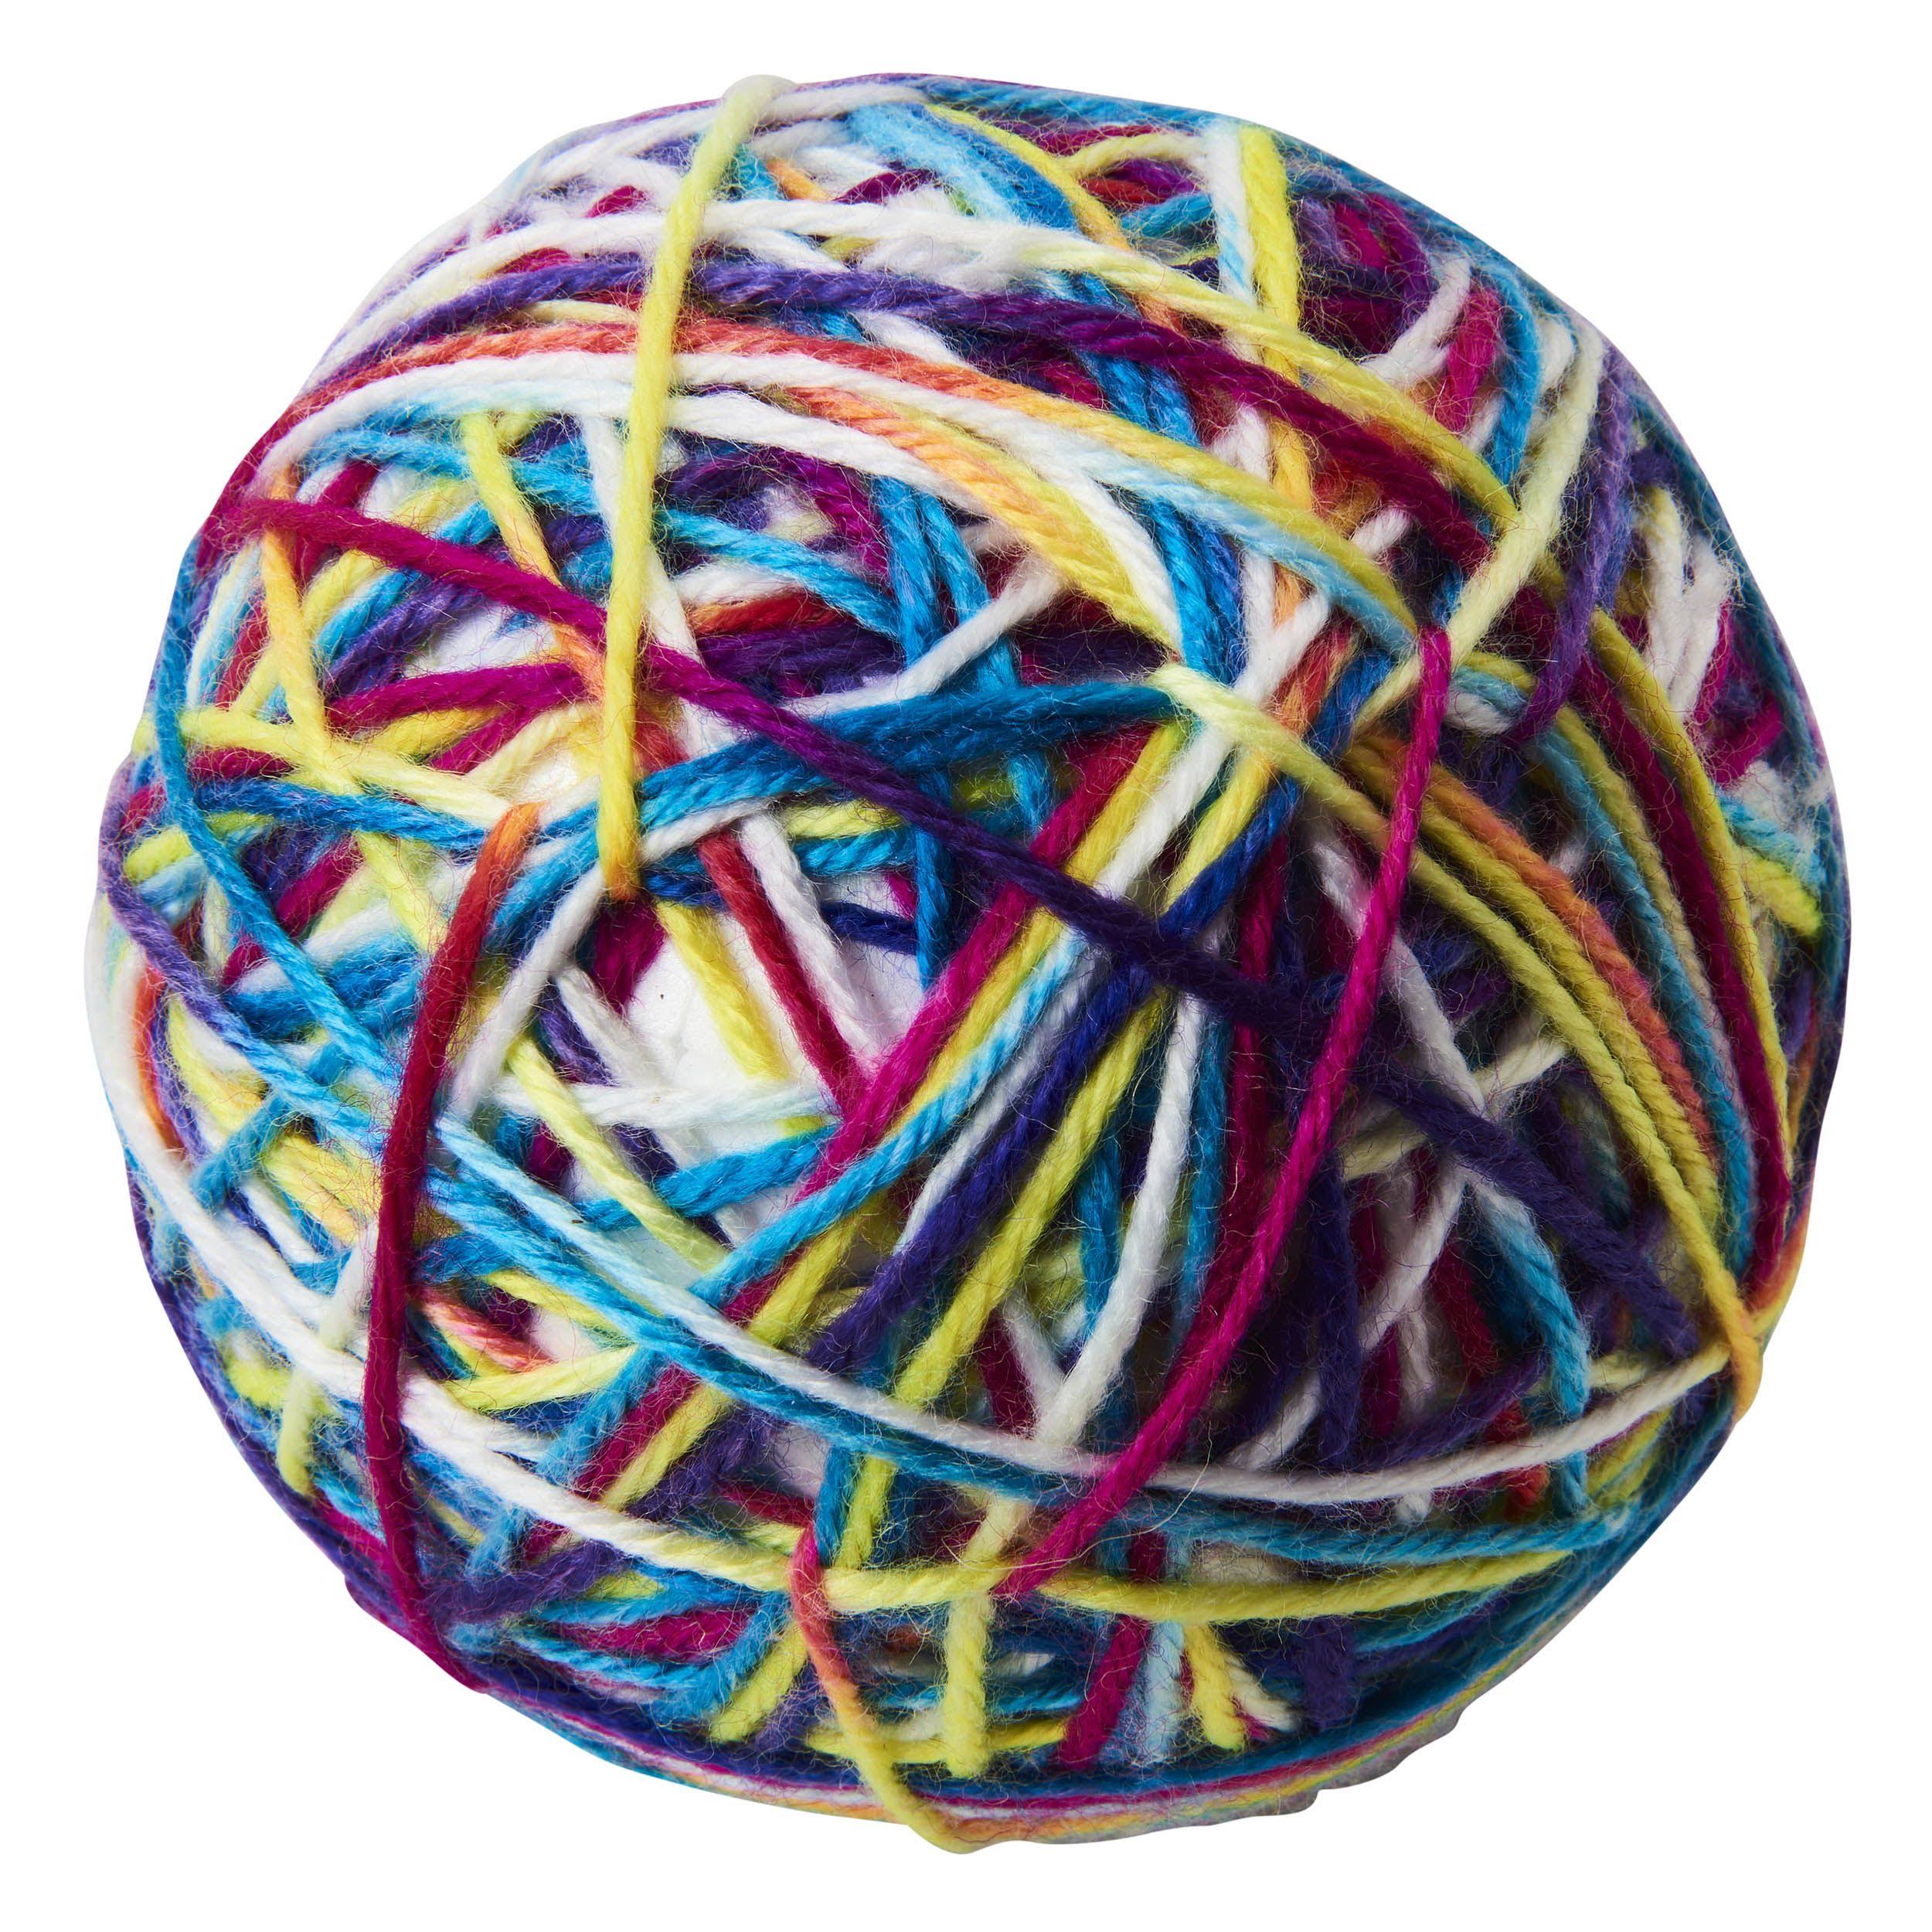 Spot Sew Much Fun Yarn Ball Cat Toy 3.5in